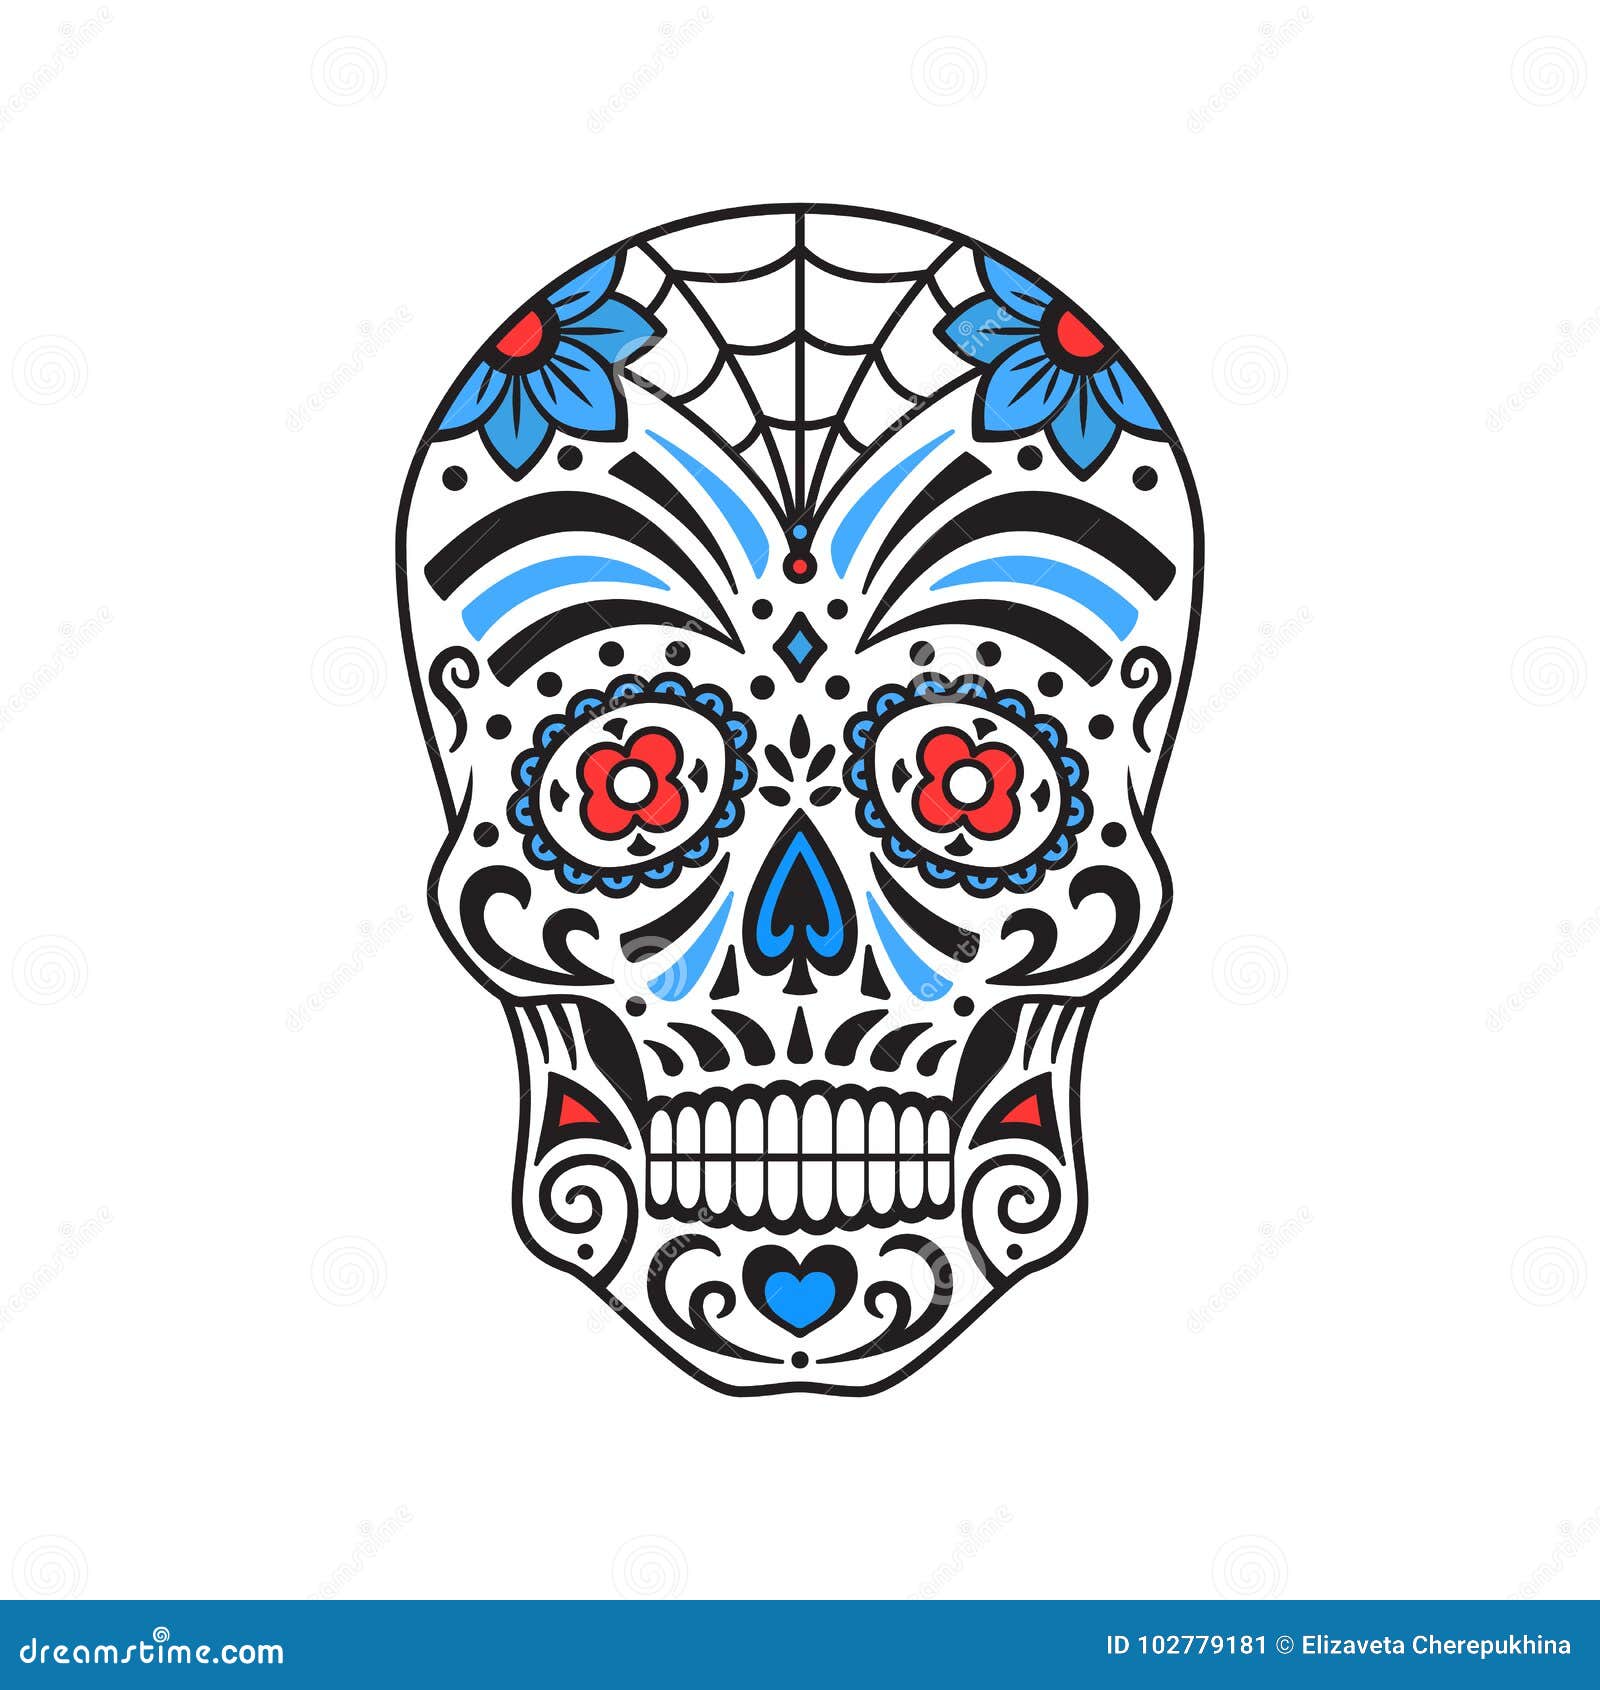 Sugar Skull And Calavera Tattoo Meaning and Design Ideas  Saved Tattoo